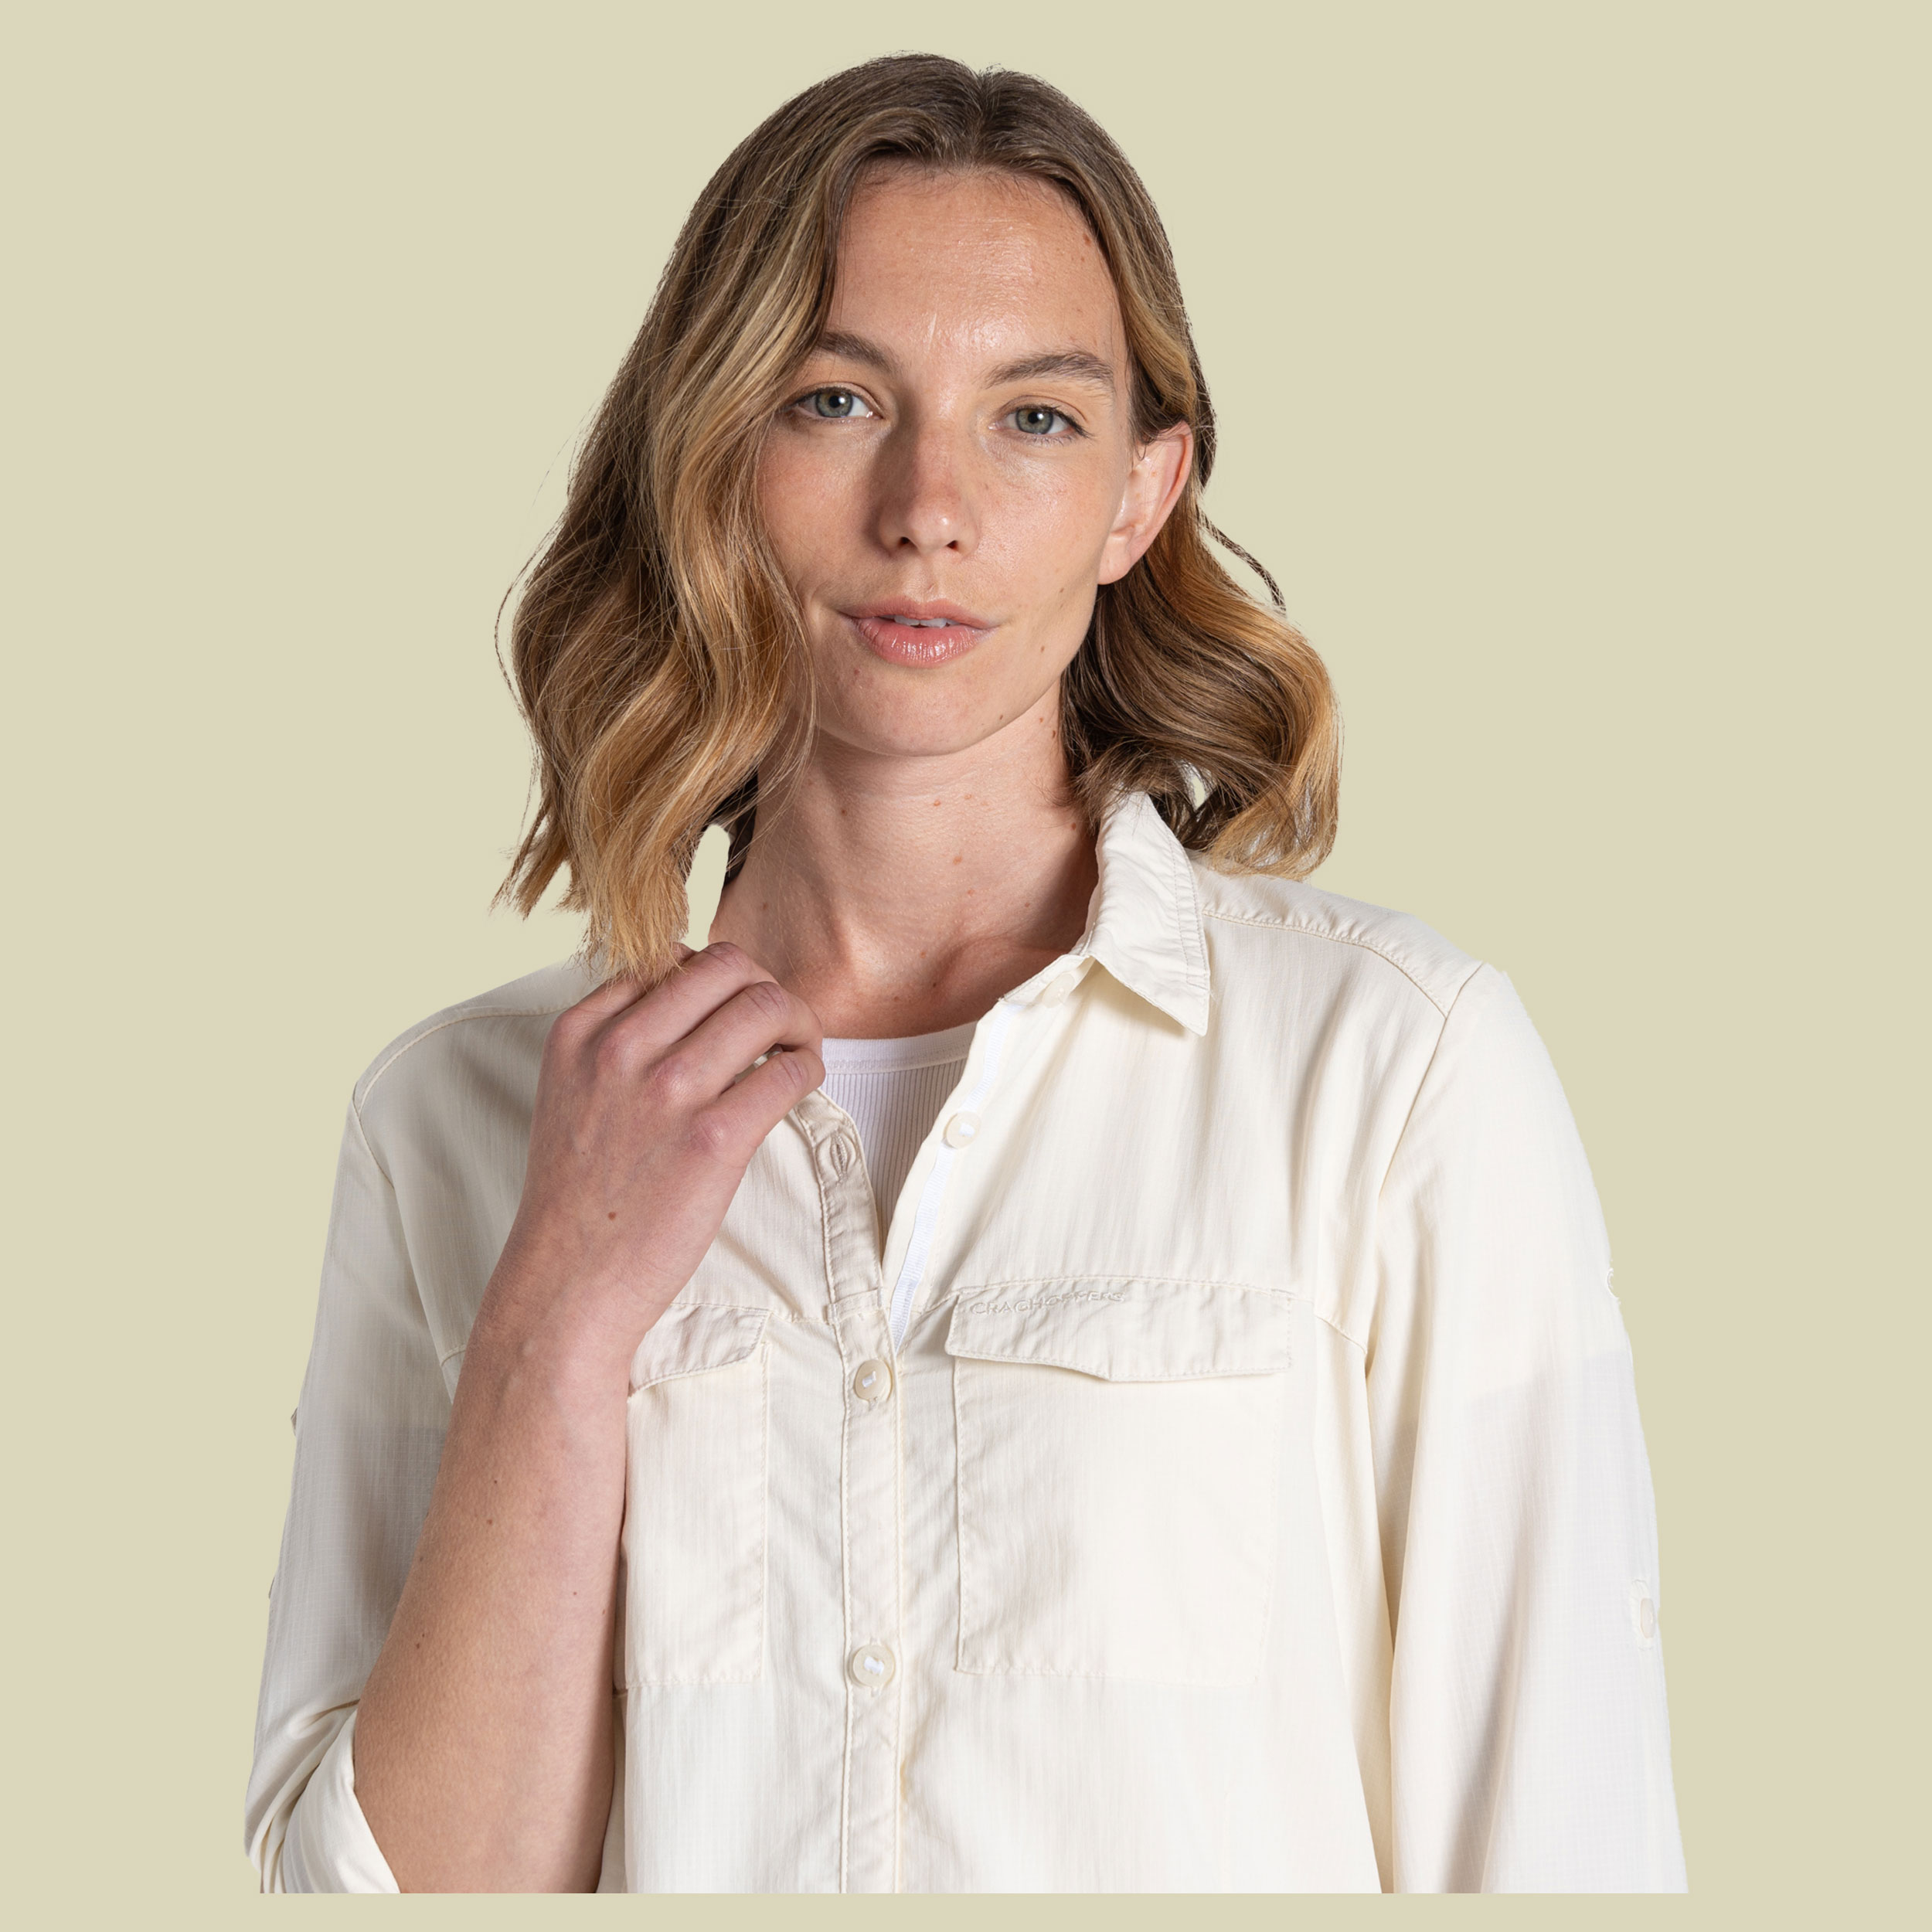 NosiLife Adventure Long Sleeved Shirt III Women 36 beige - sea salt (UK 10)